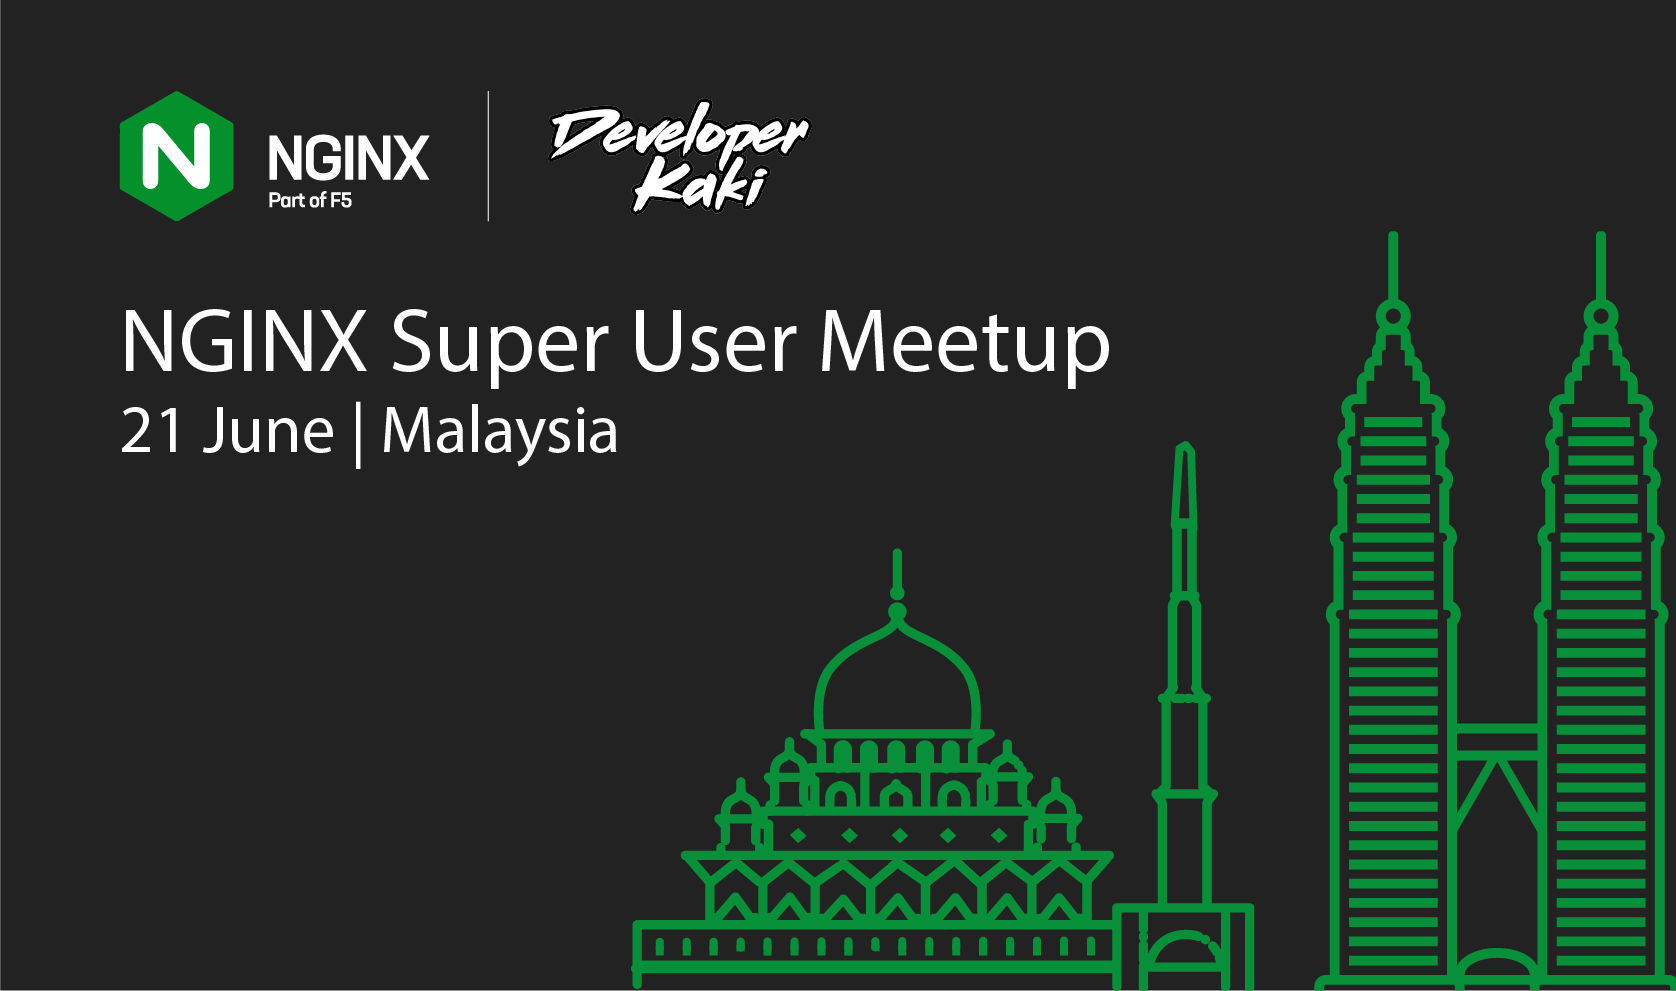 NGINX Super User Meetup announcement